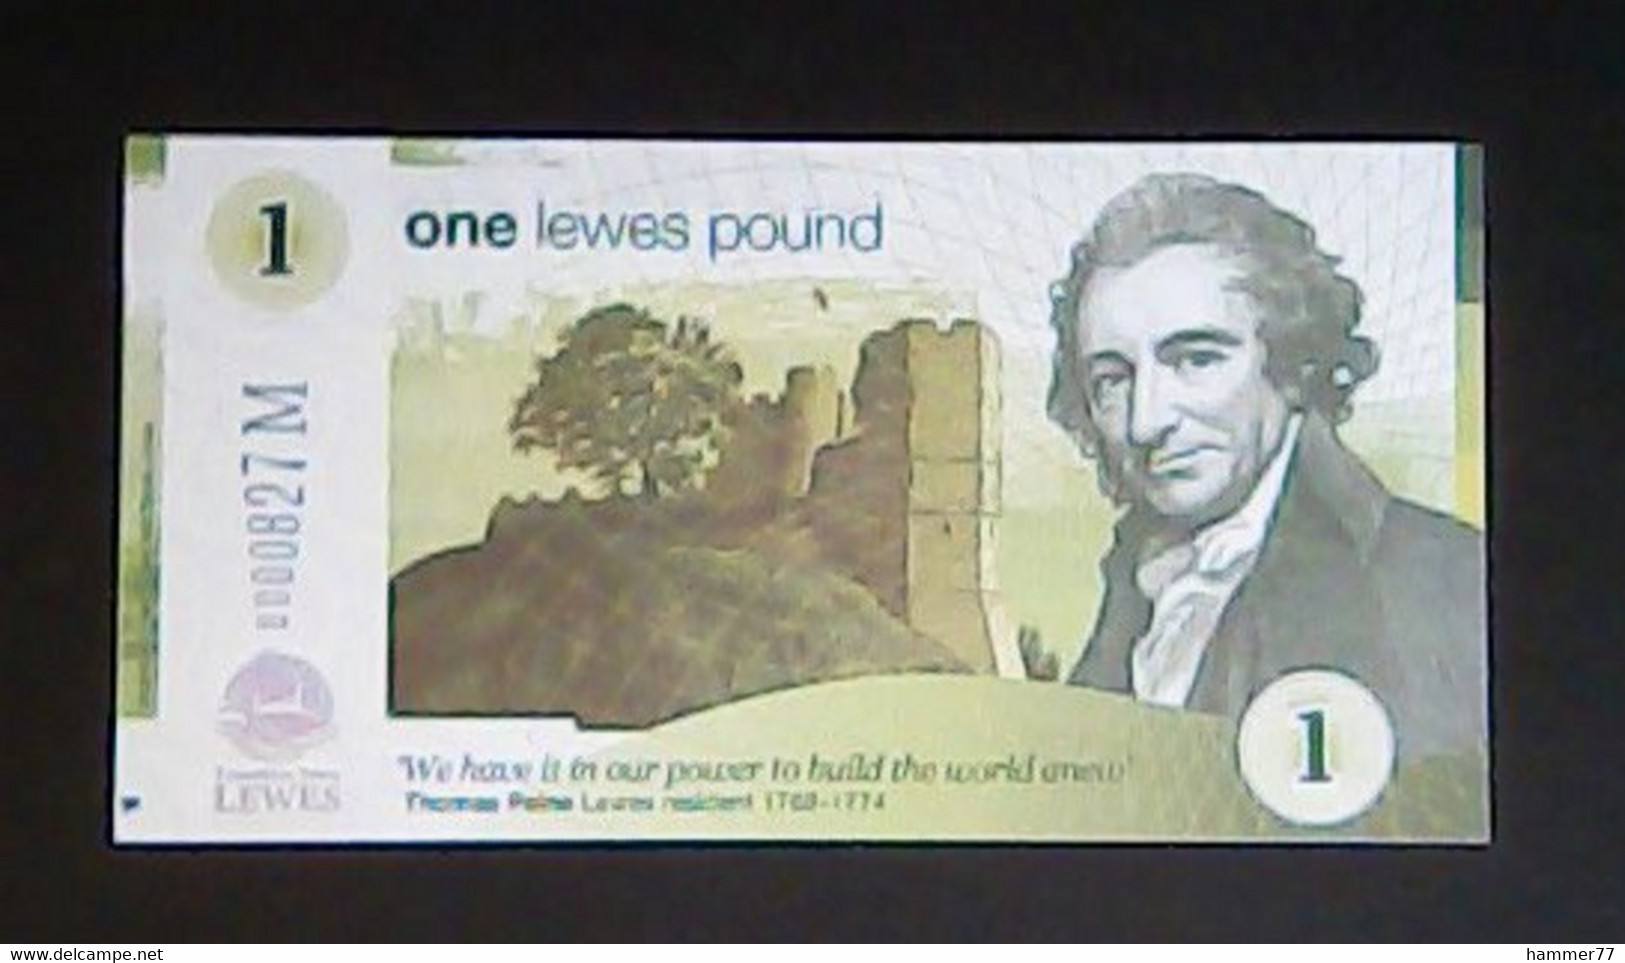 United Kingdom England 2013: Lewes 1 Pound Mumford & Sons Edition Unc - 1 Pound